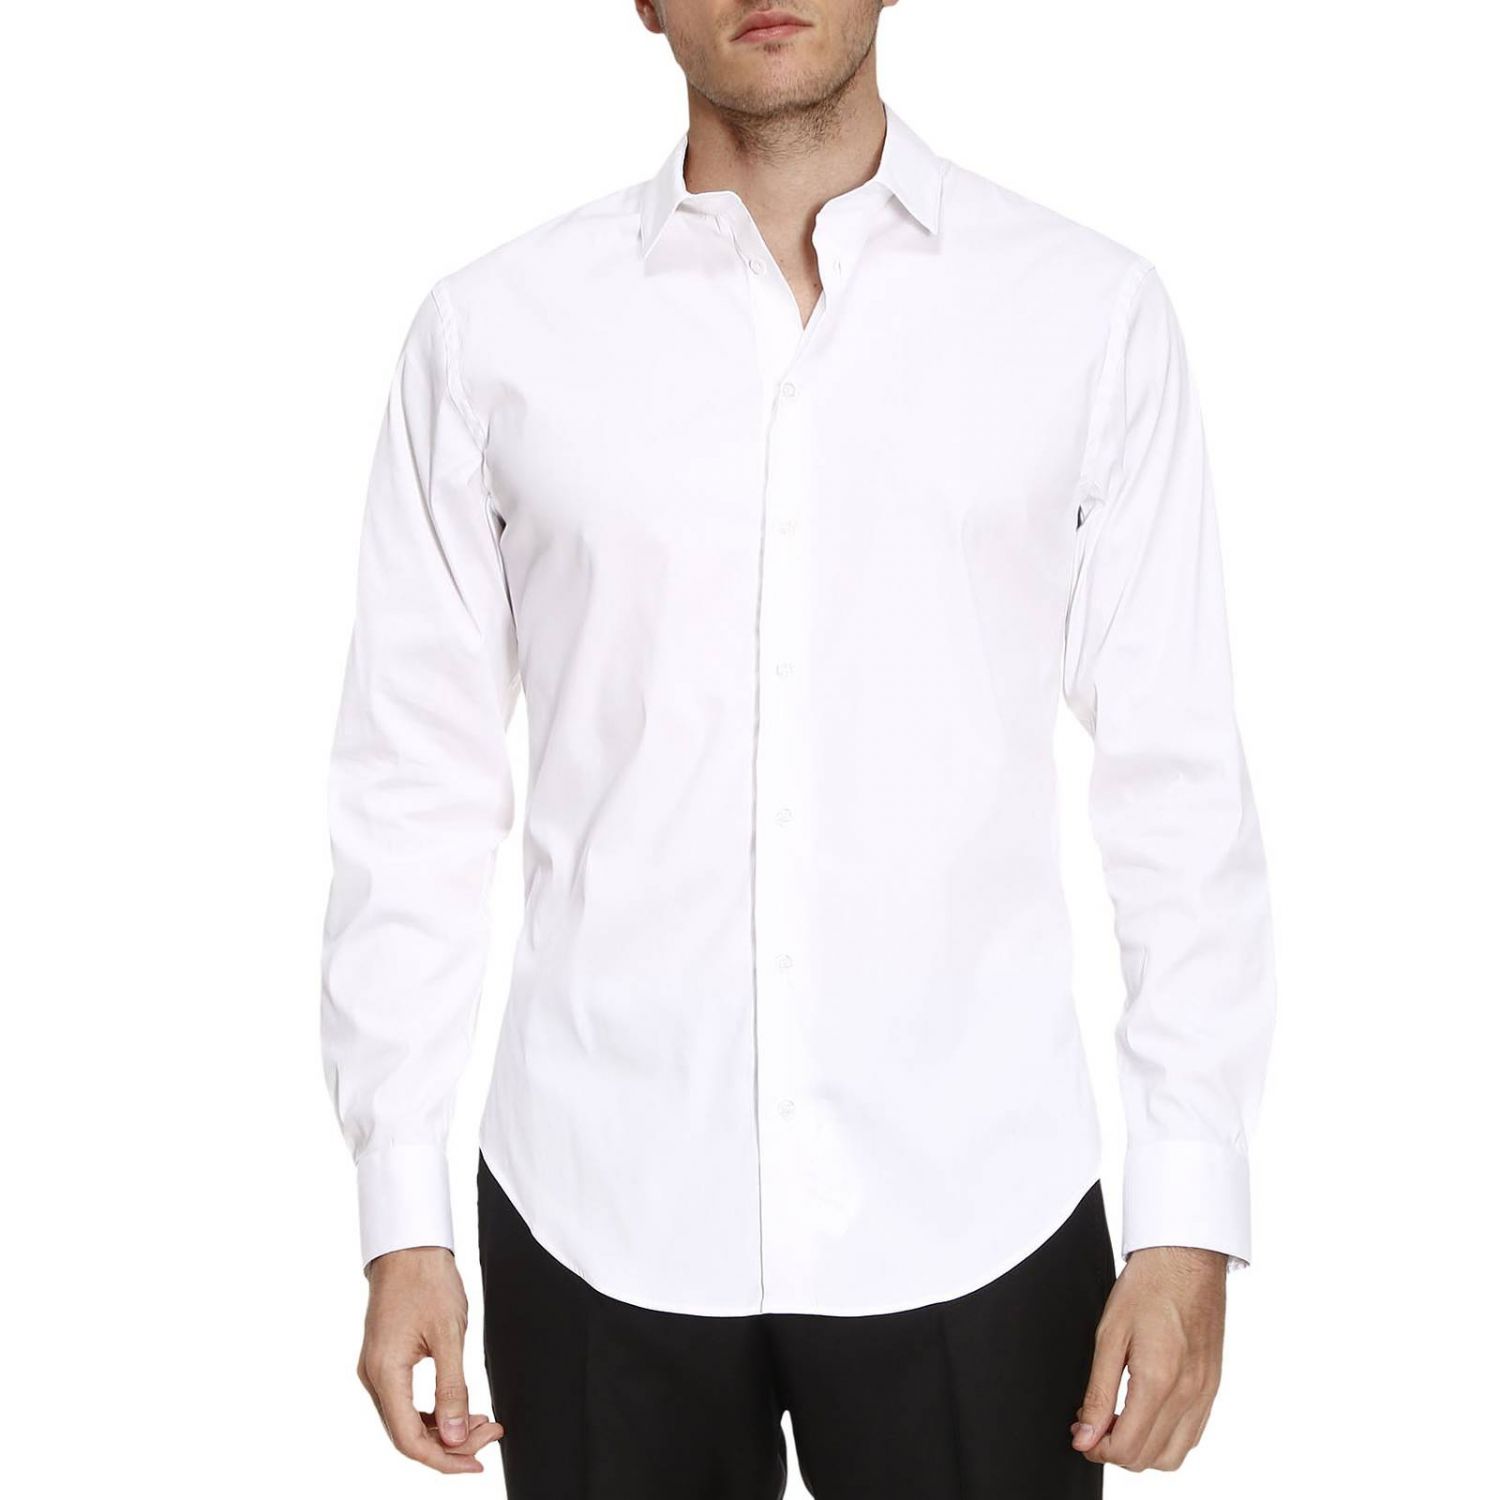 armani white dress shirt